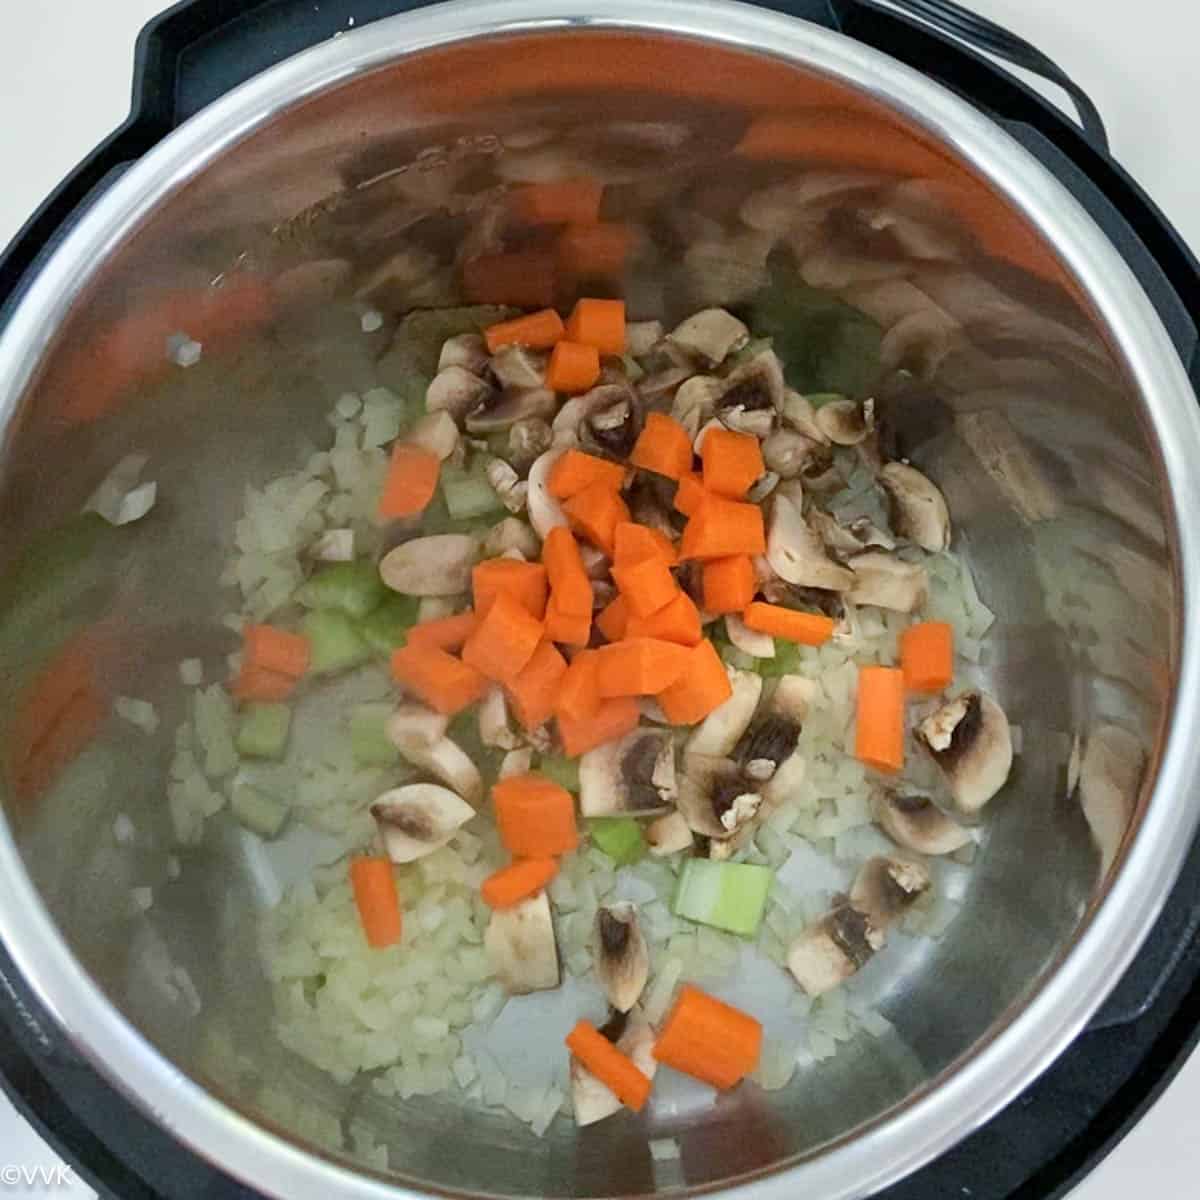 adding the vegetables